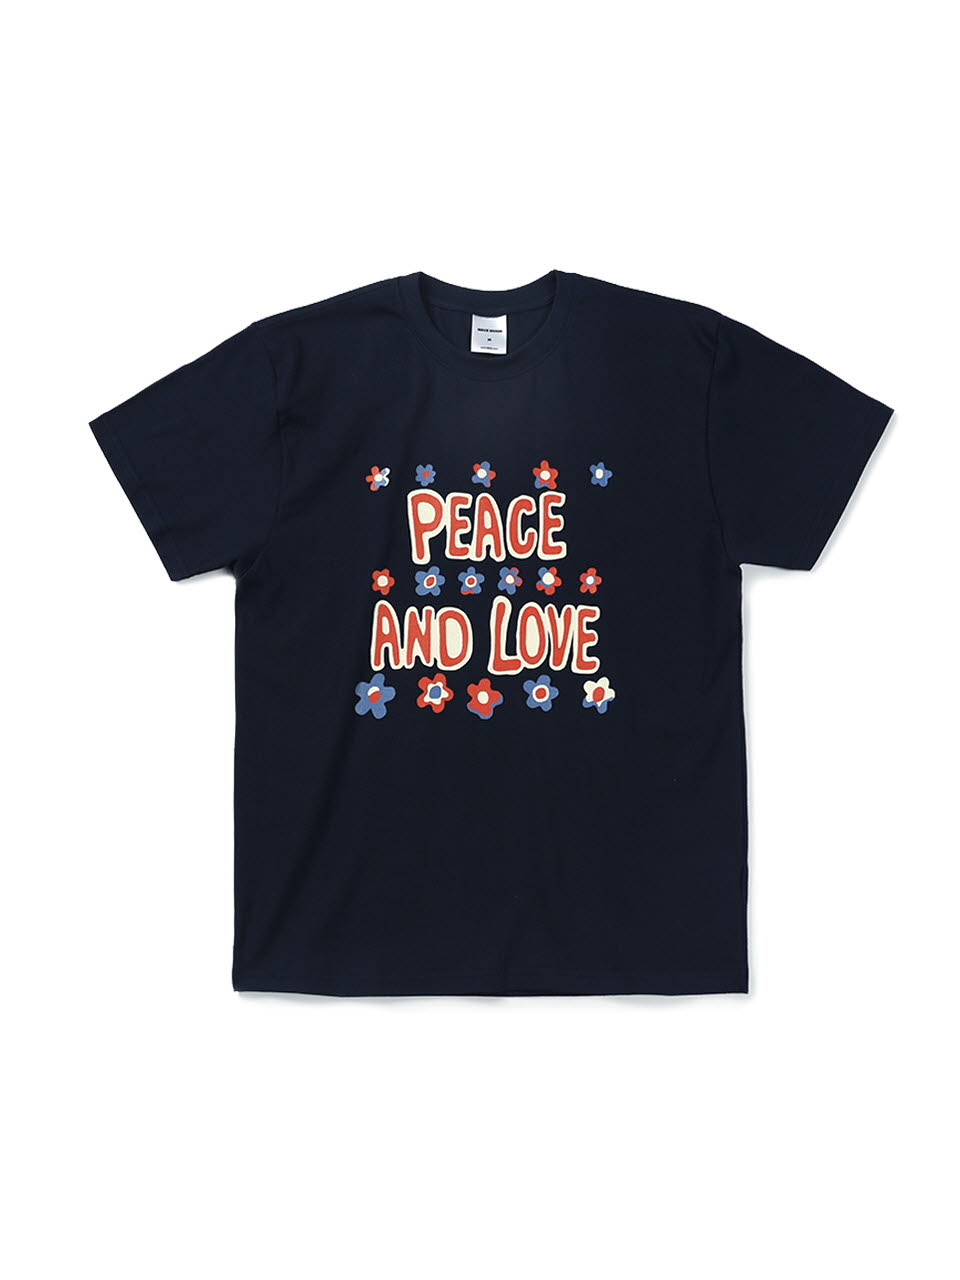 Peace and love short sleeve T-shirt navy